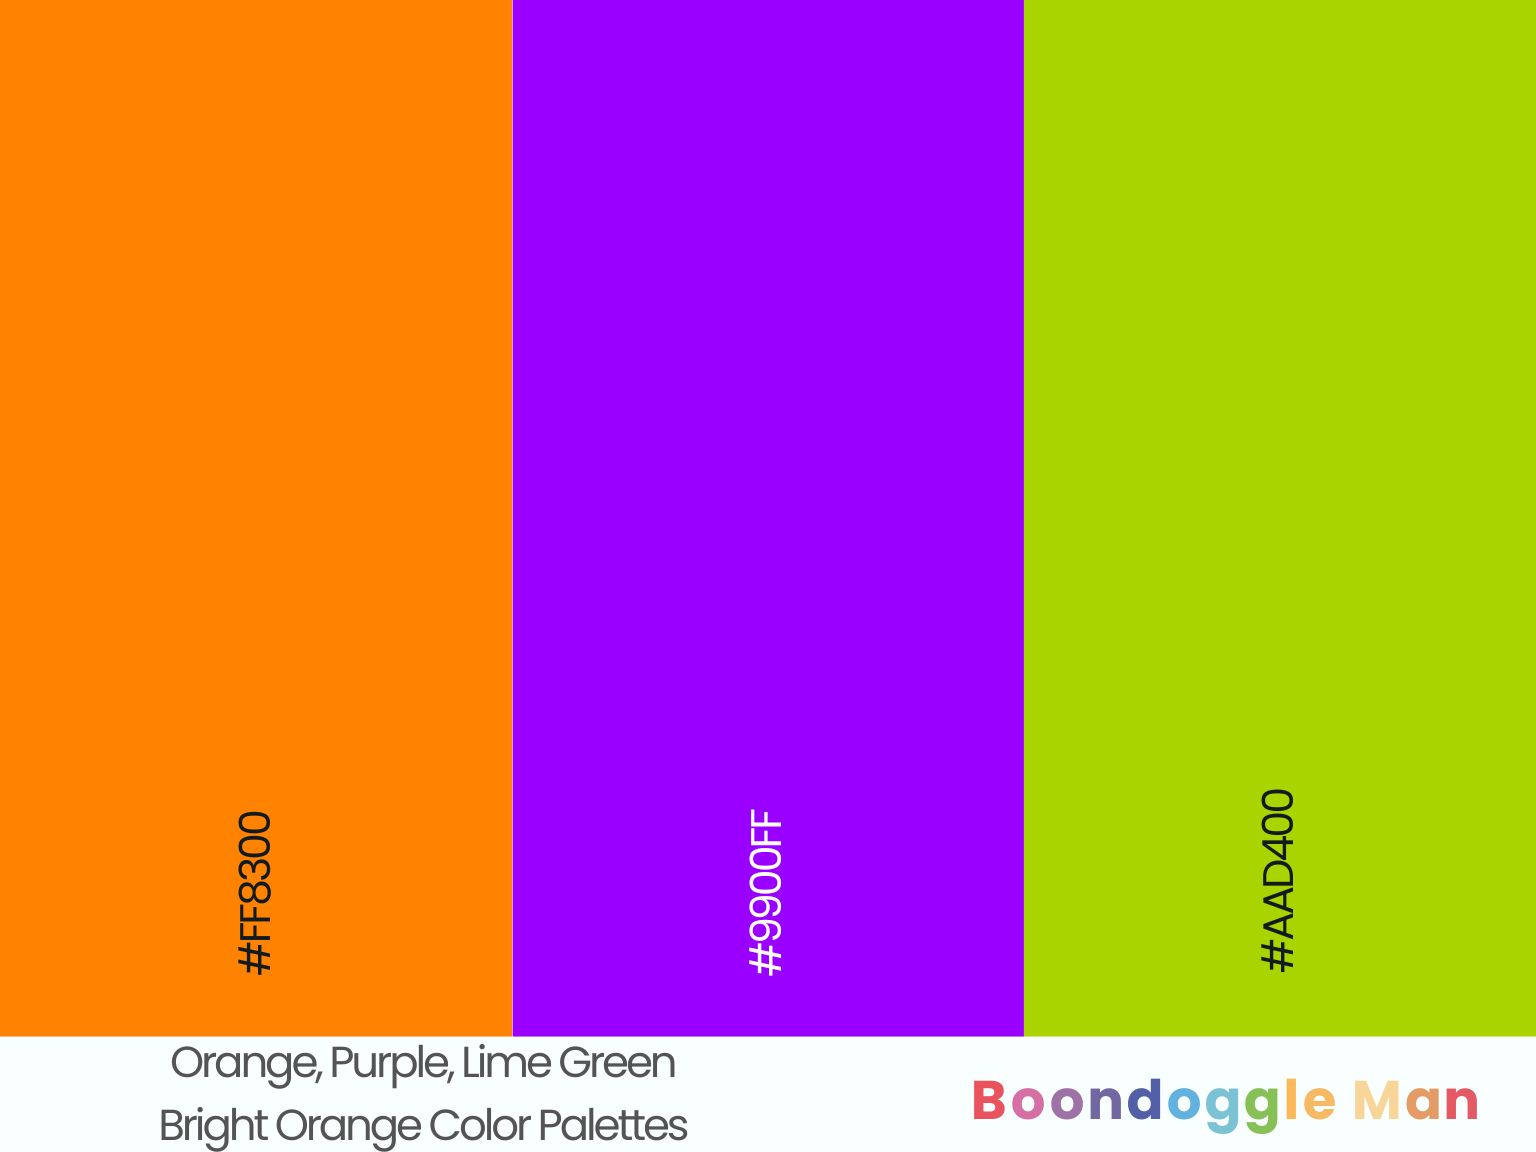 Orange, Purple, Lime Green